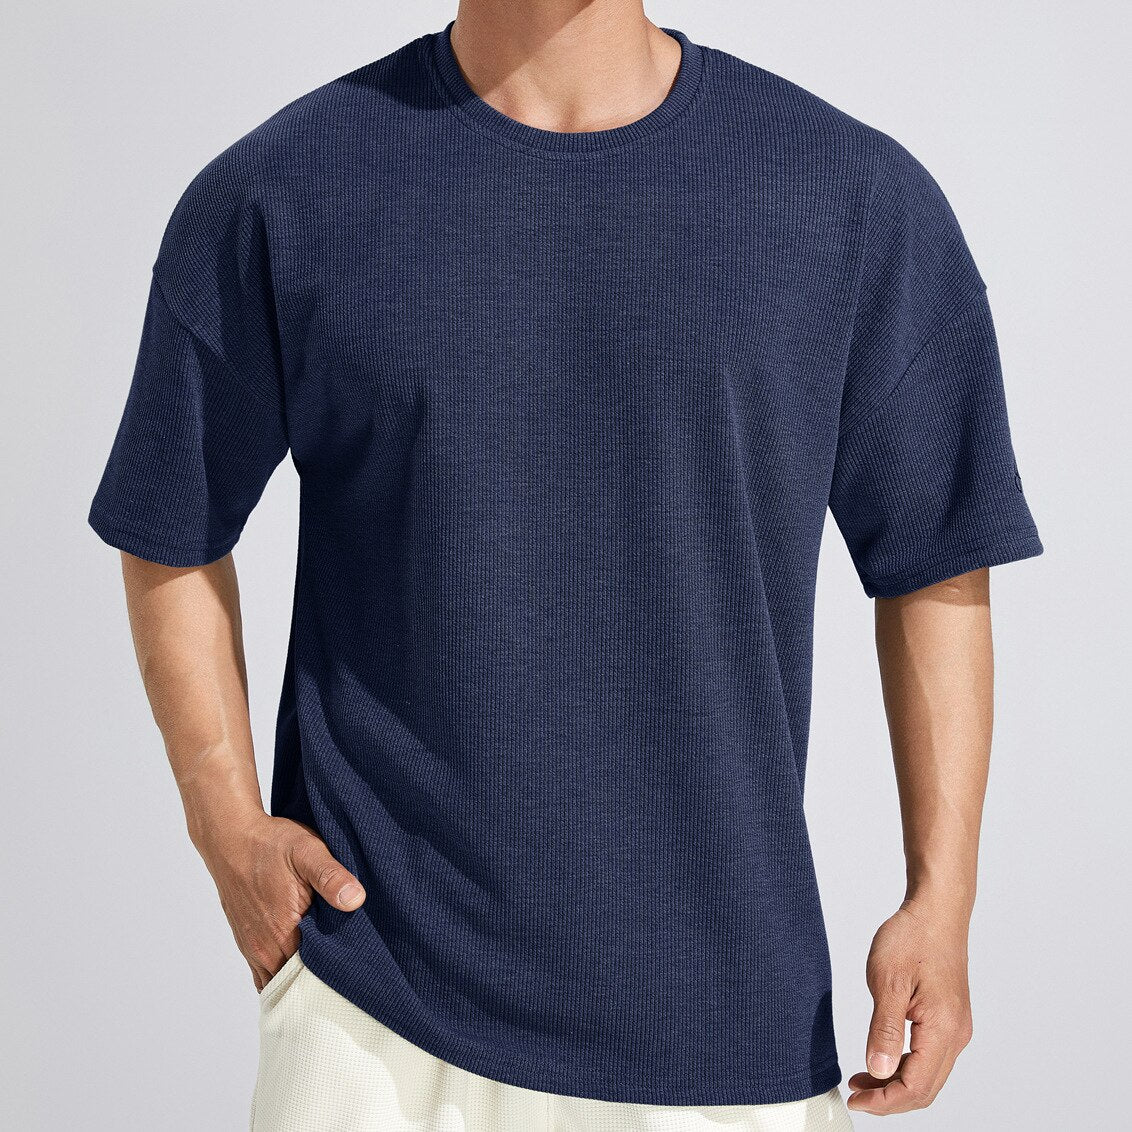 Summer Casual Loose T-shirt Men Short Sleeve Shirt Male Fashion Hip Hop Tee Tops Streetwear Solid Stripes Corduroy Clothing